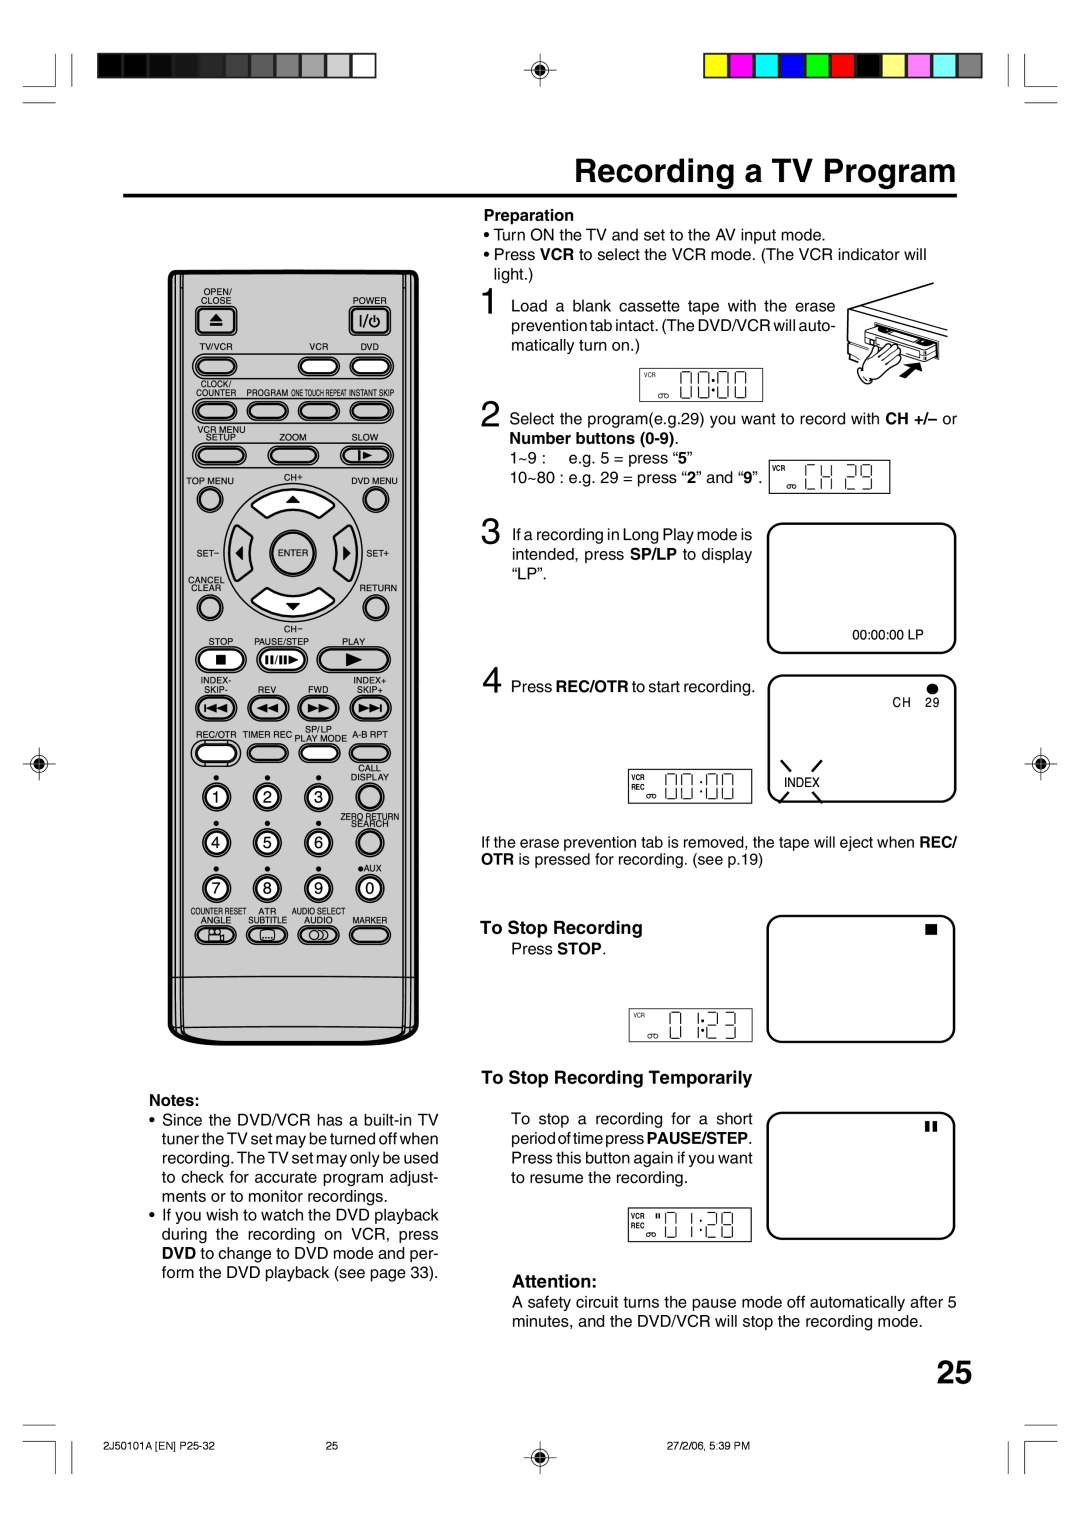 Toshiba SD-37VBSB manual Recording a TV Program, To Stop Recording Temporarily, Preparation 